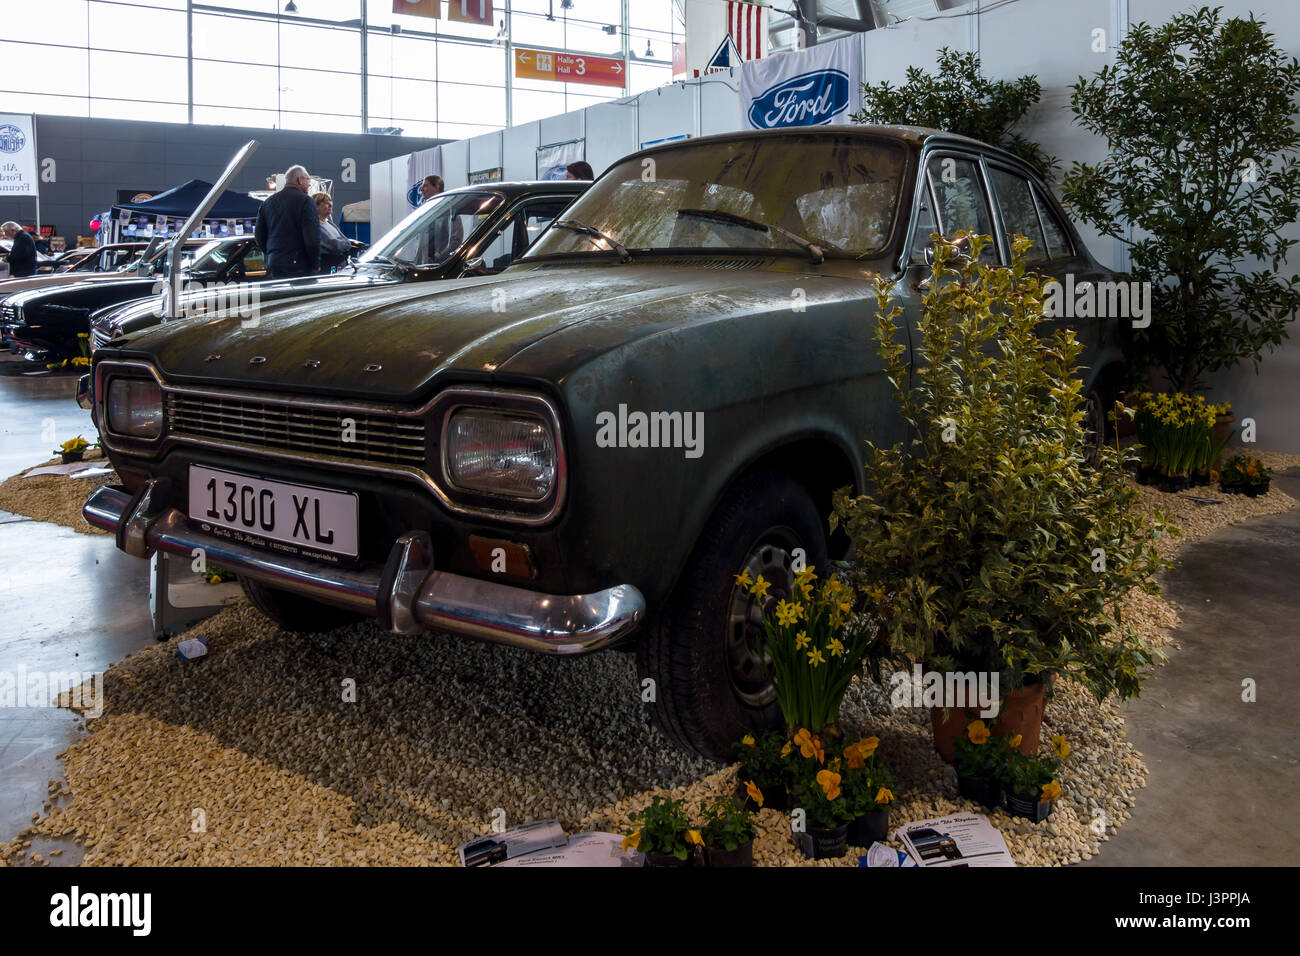 STUTTGART, GERMANY - MARCH 03, 2017: Small family car Ford Escort MK1 1300 XL, 1970. Europe's greatest classic car exhibition 'RETRO CLASSICS' Stock Photo